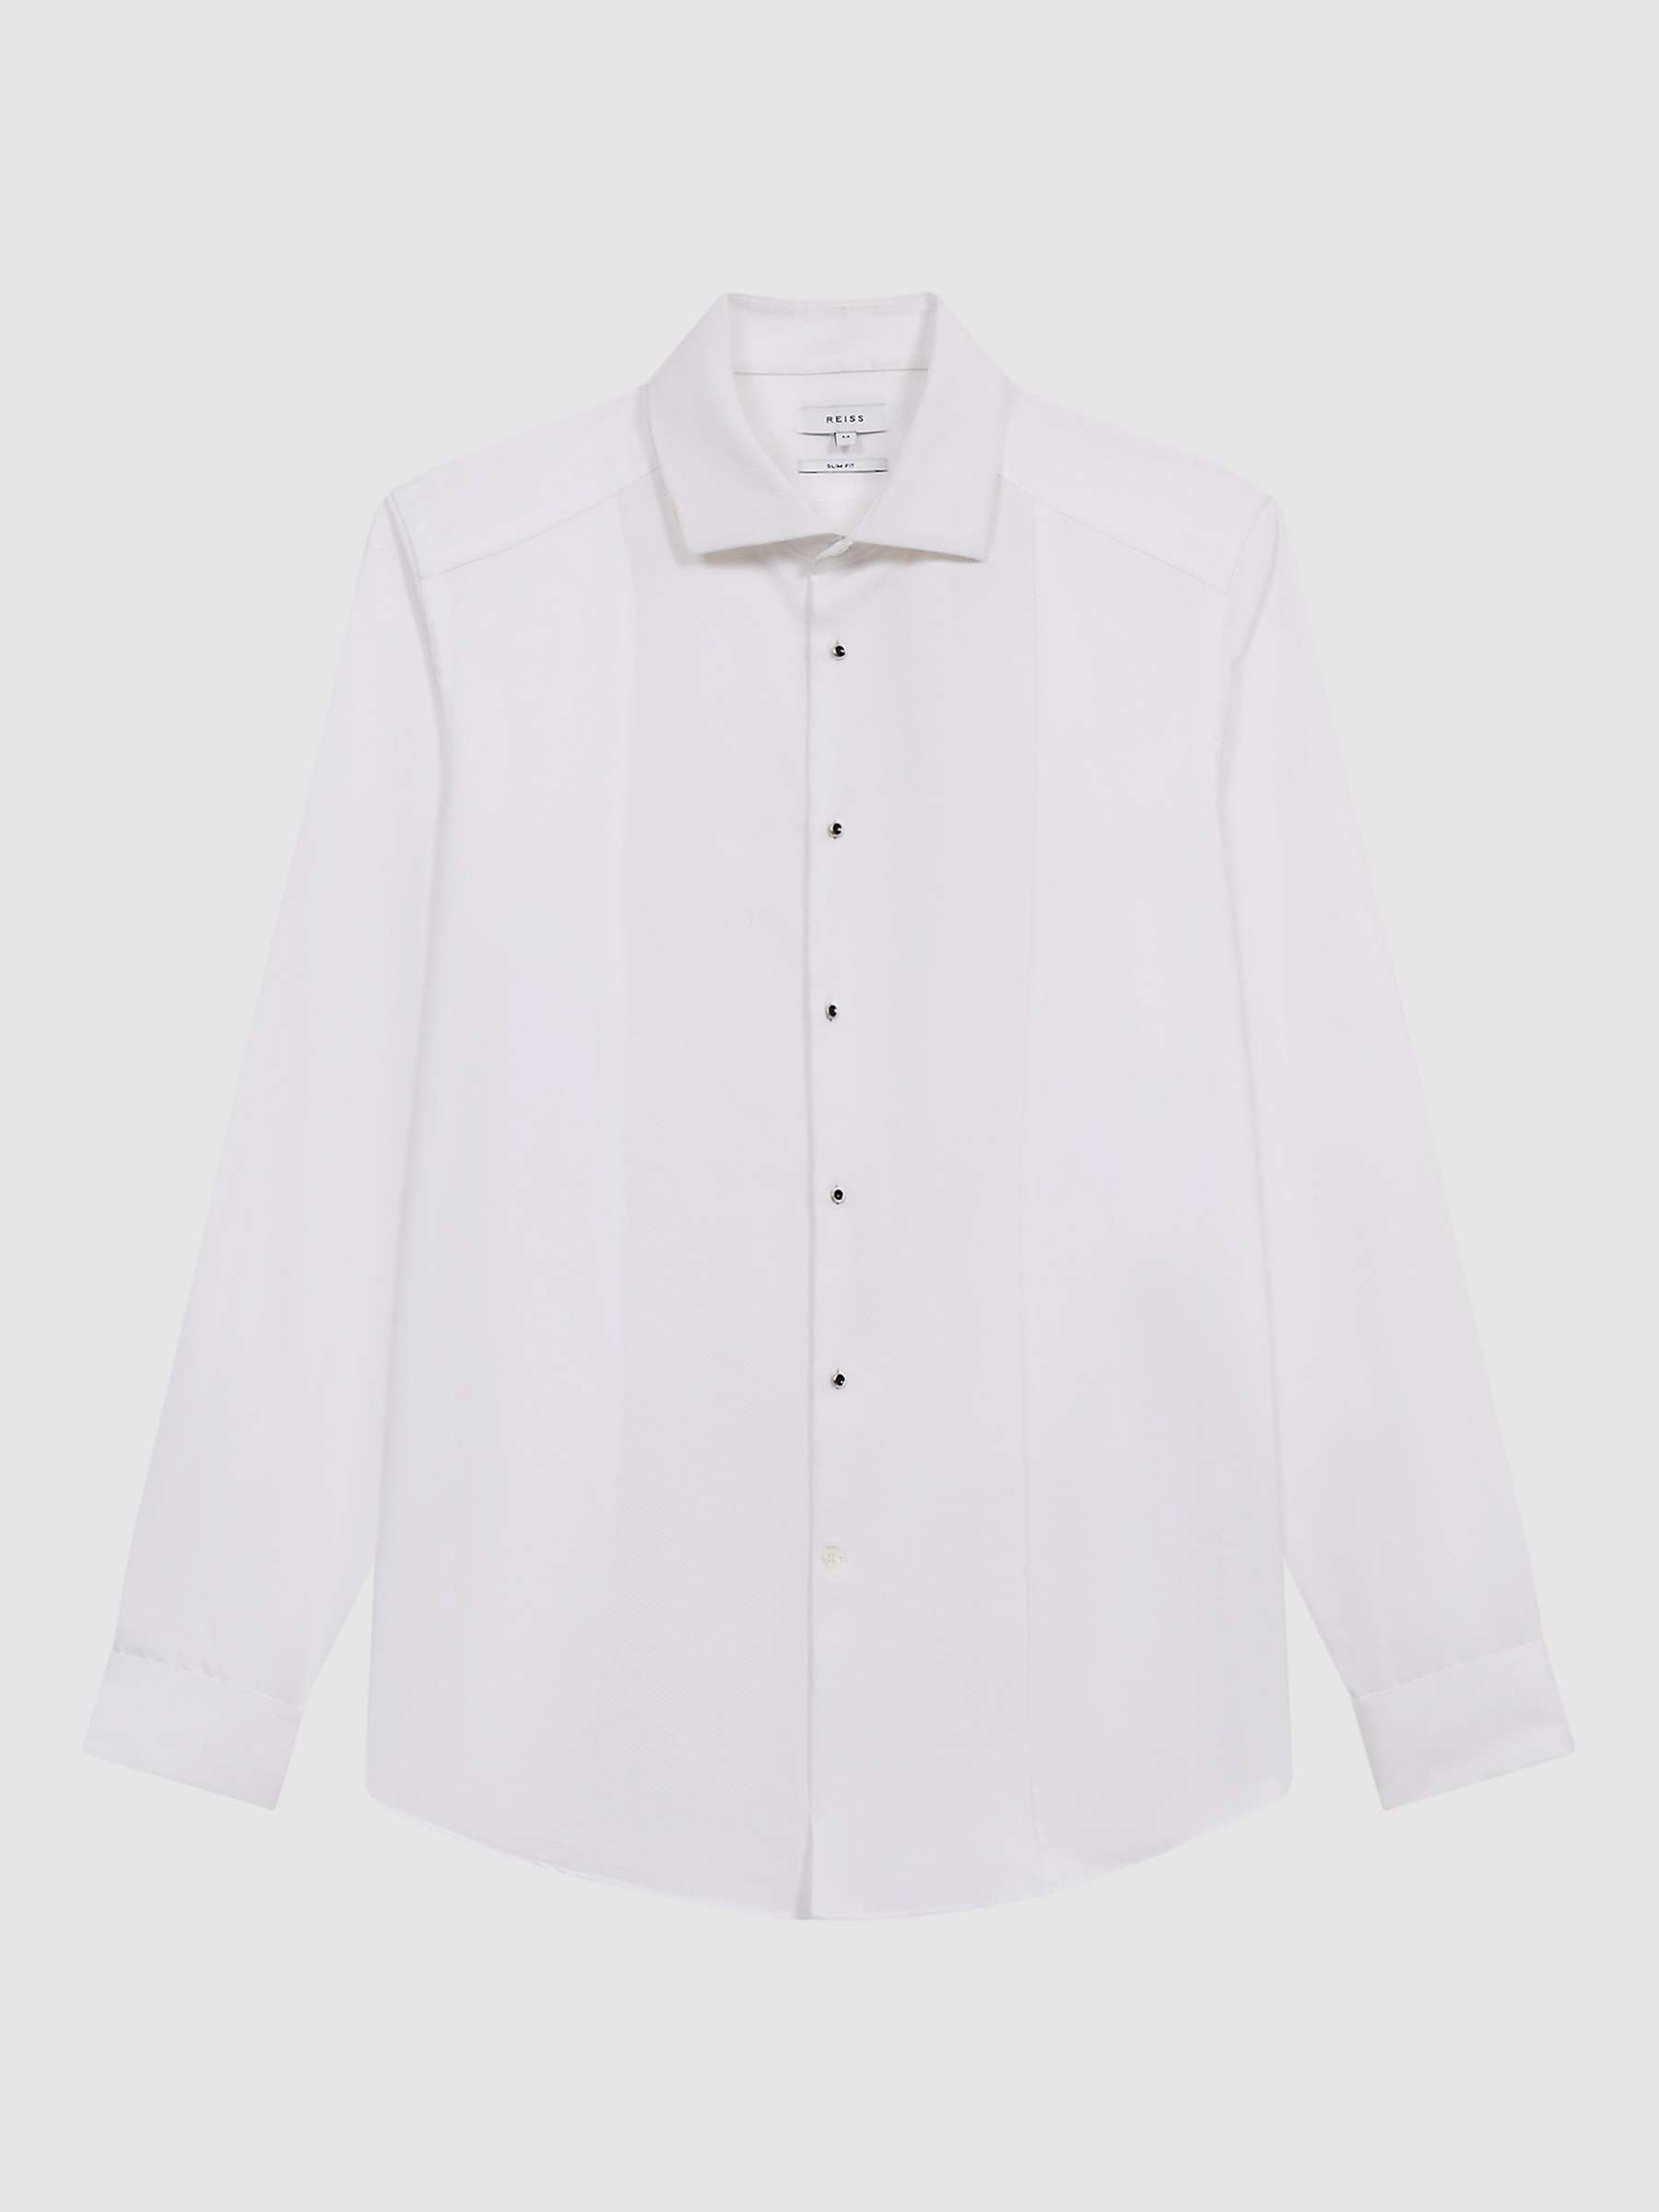 Buy Reiss Marcel Slim Fit Cotton Dinner Shirt, White Online at johnlewis.com